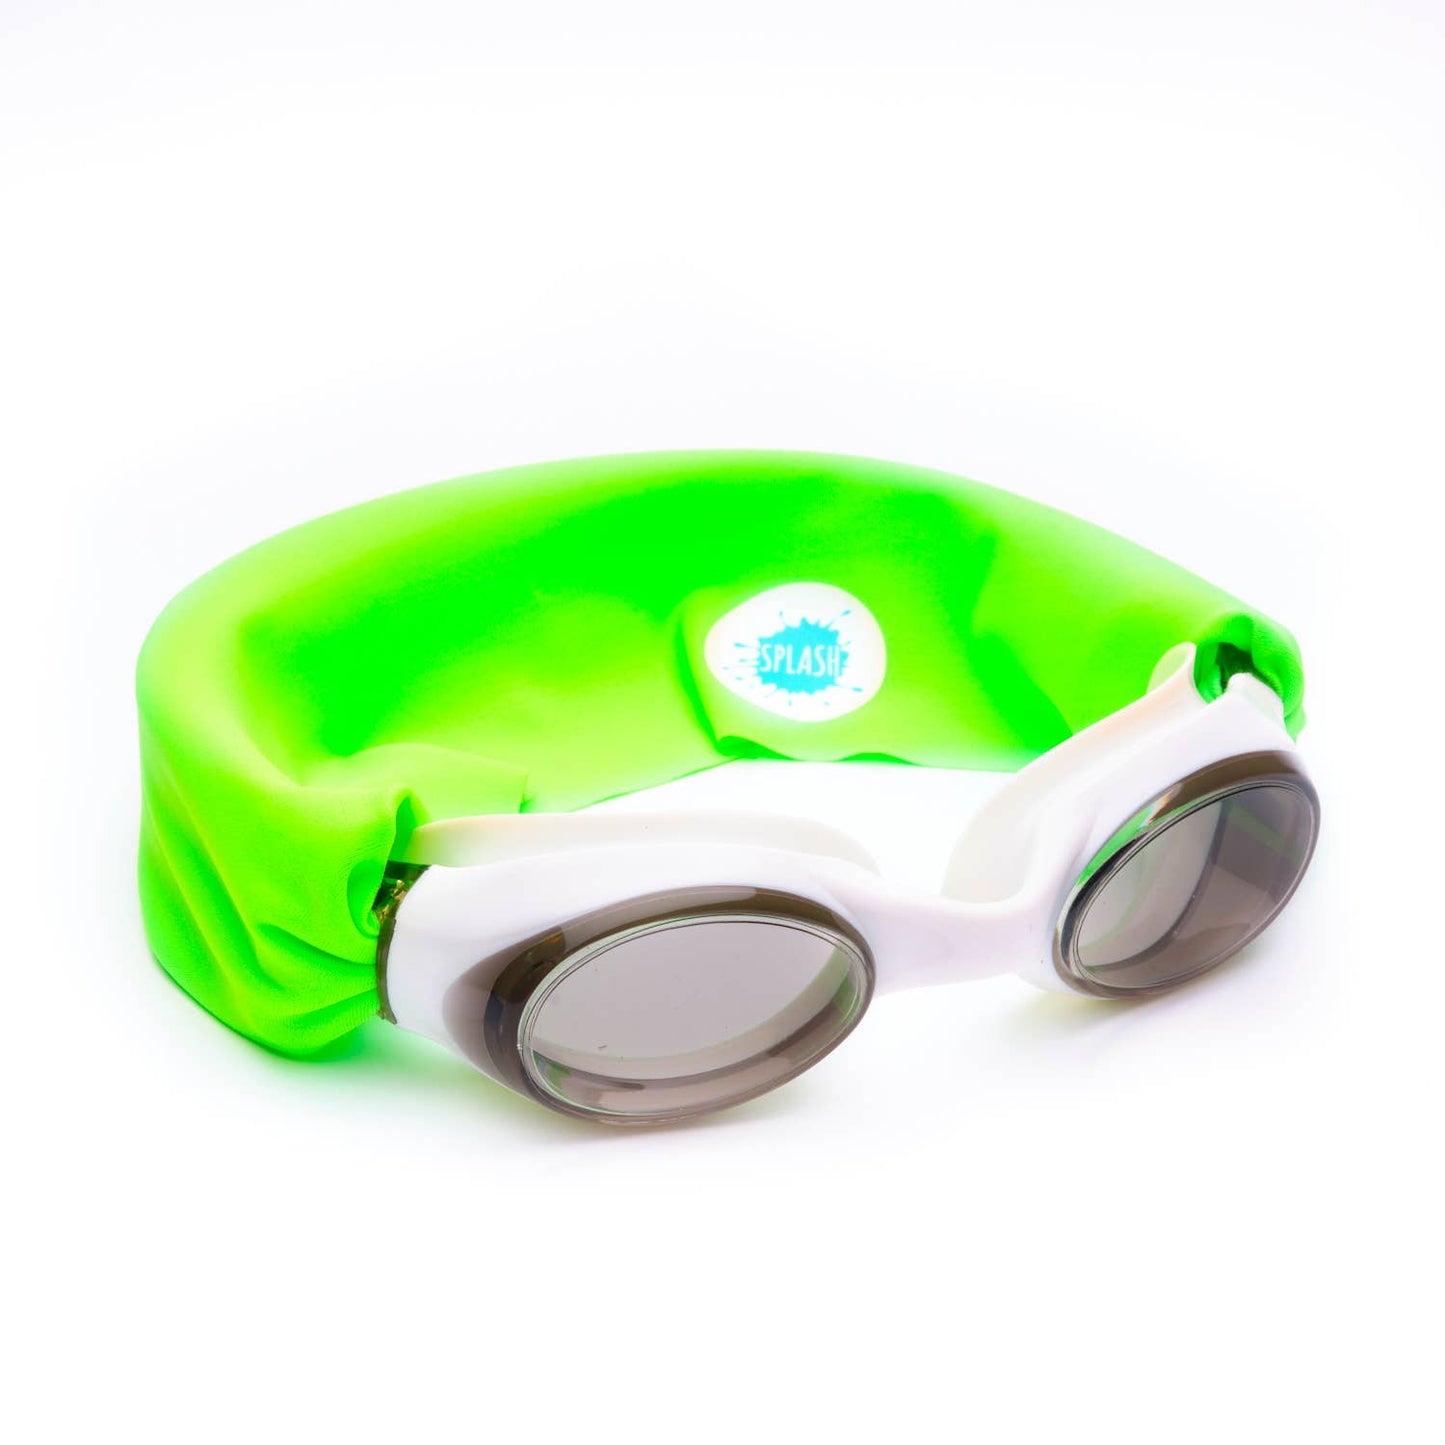 Splash Swim Goggles - Neon Green Swim Goggles